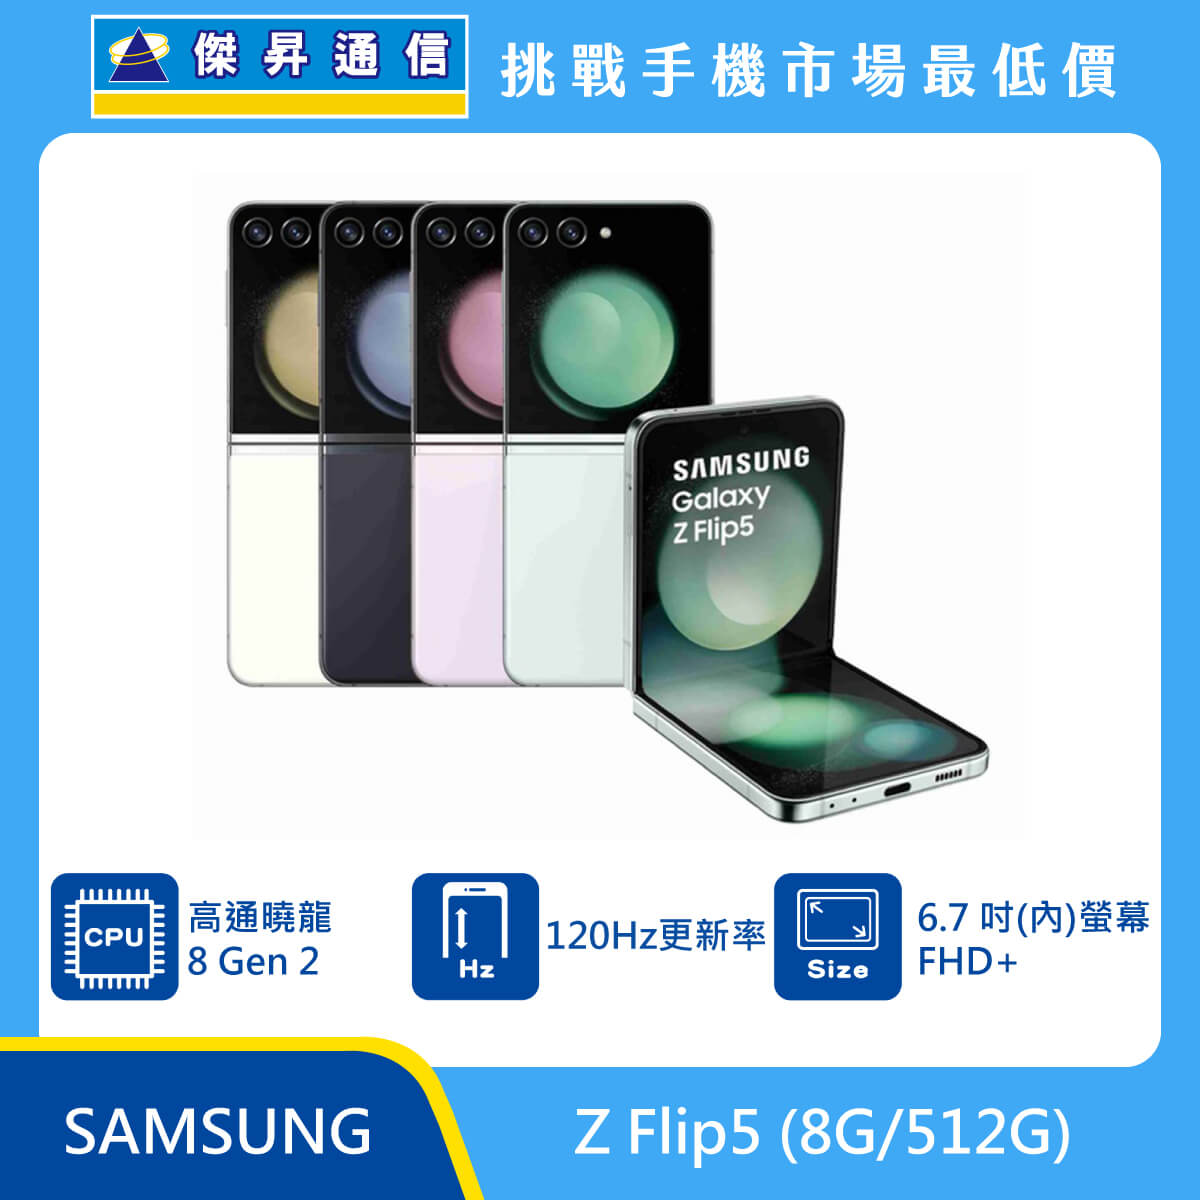 SAMSUNG Z Flip5 (8G/512G)